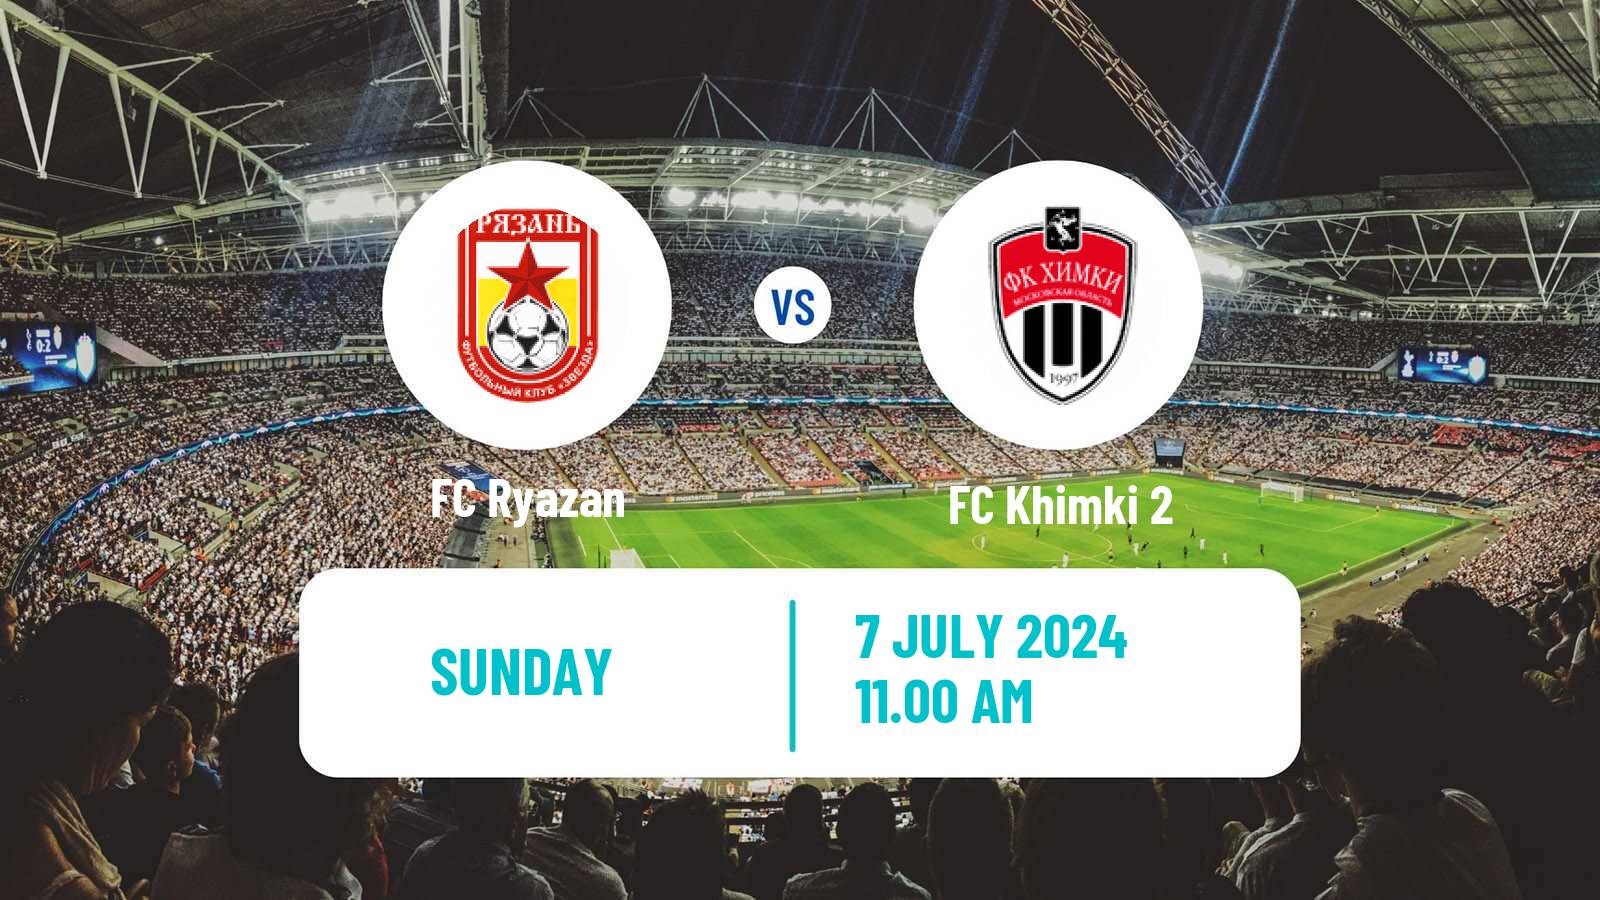 Soccer FNL 2 Division B Group 3 Ryazan - Khimki 2